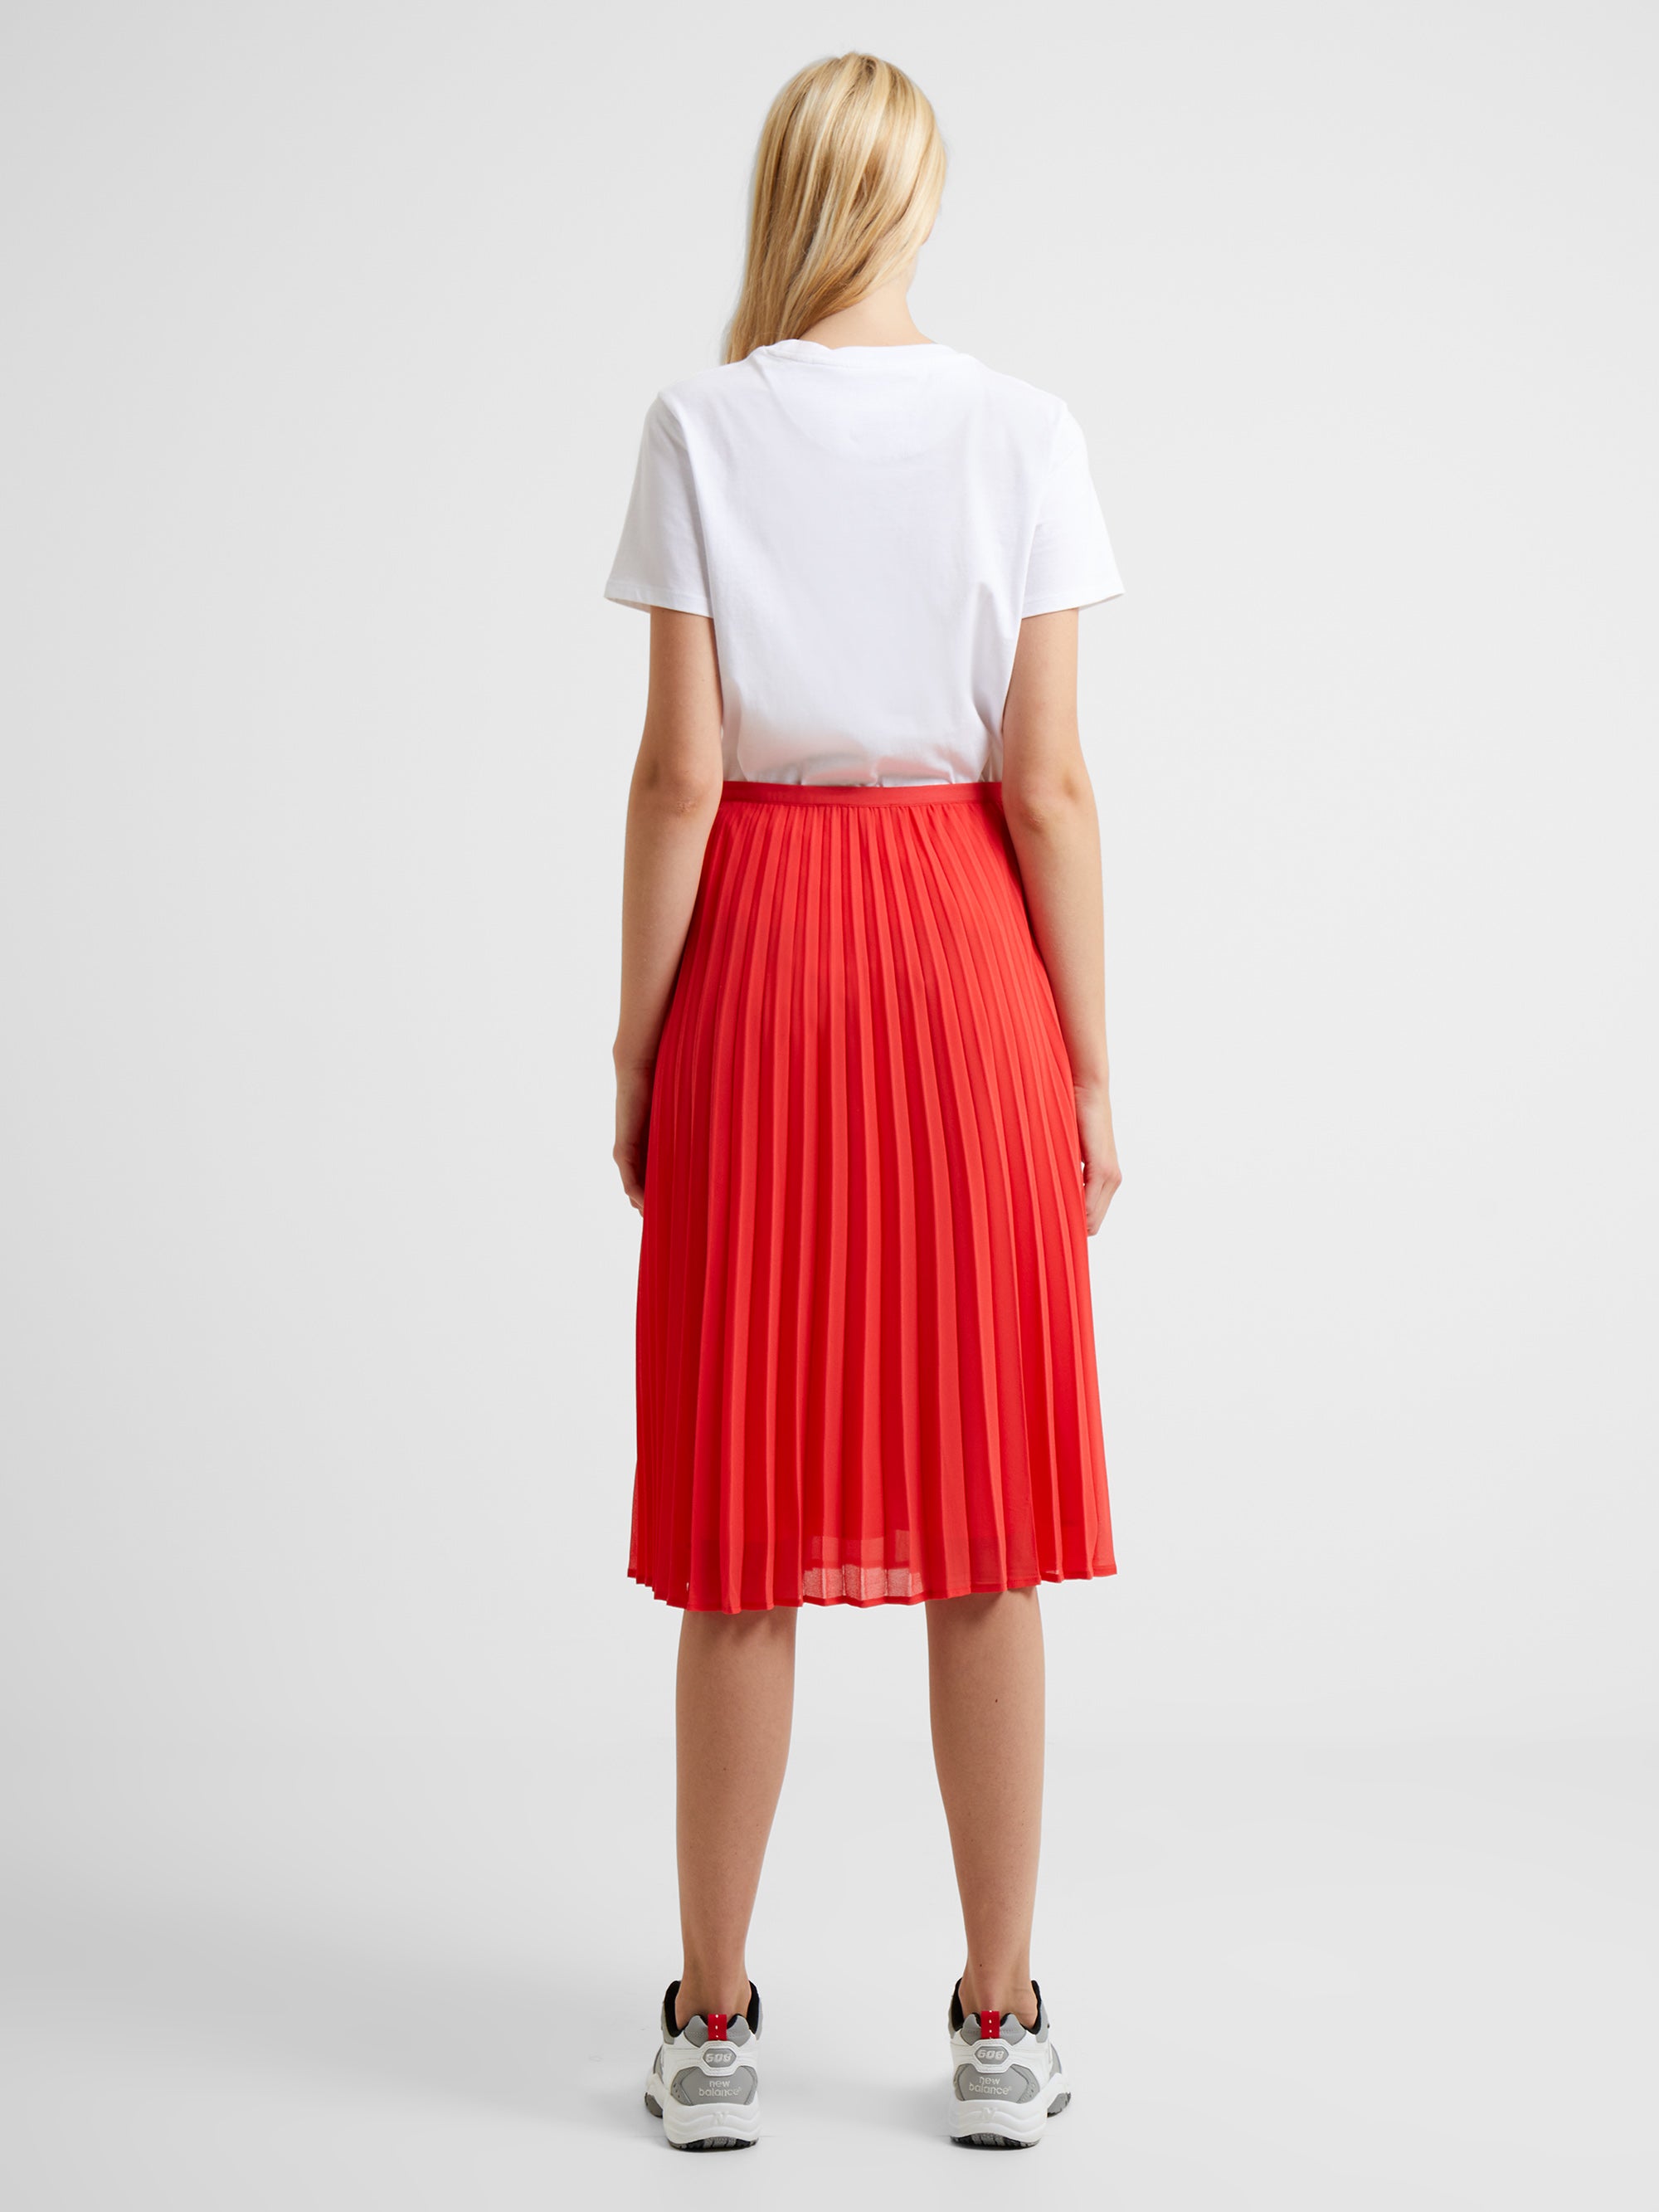 Coral Pleated Skirt High Waist Elastic Waist Band Midi, 50% OFF